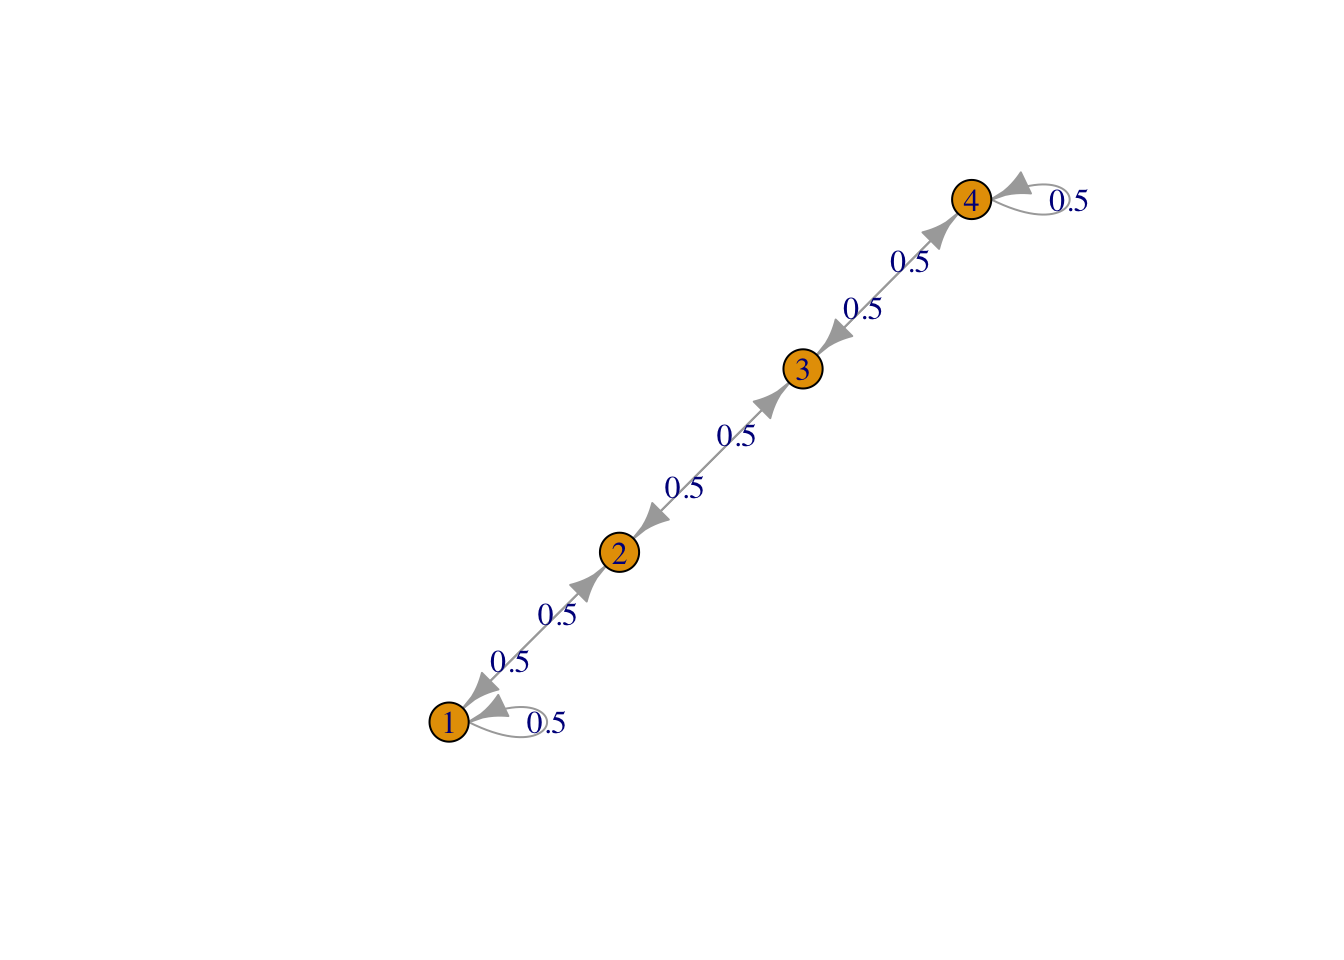 Row 1, line graph